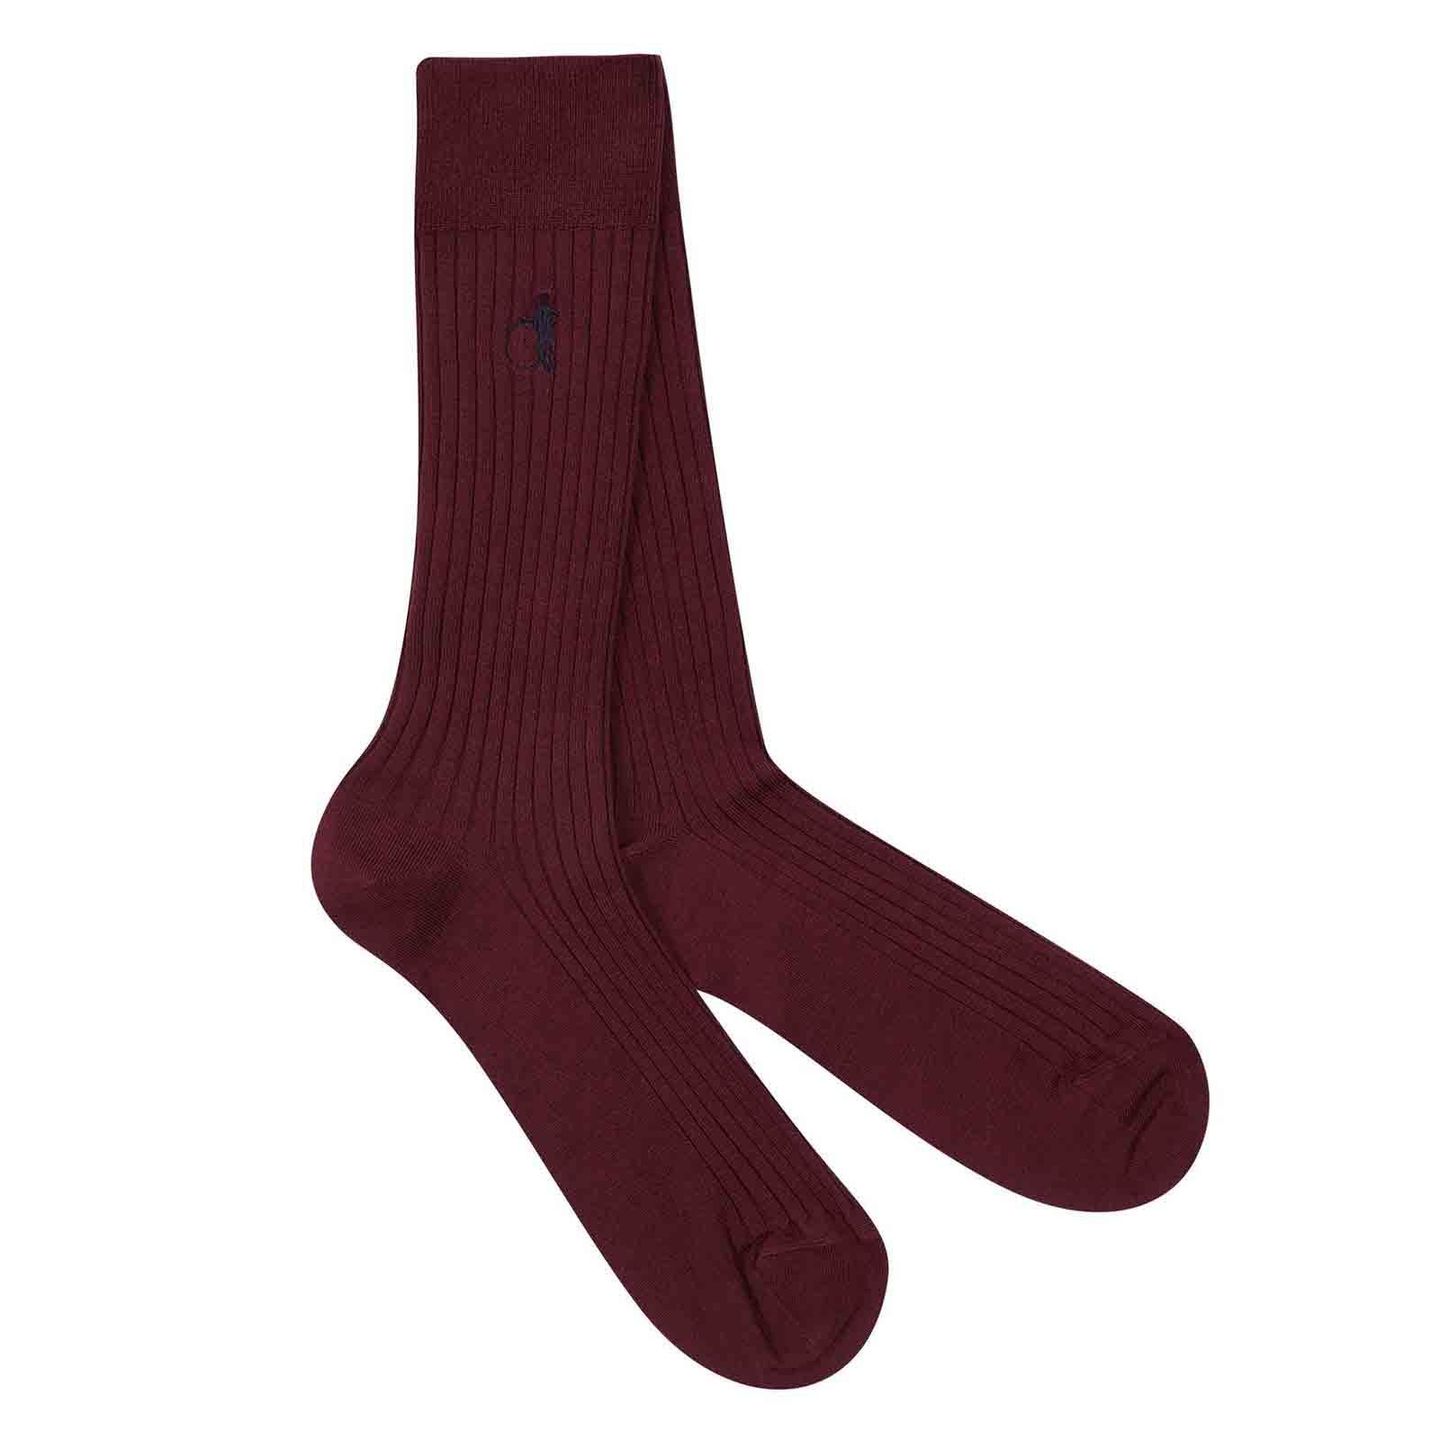 Rich burgundy red simply sartorial mens socks